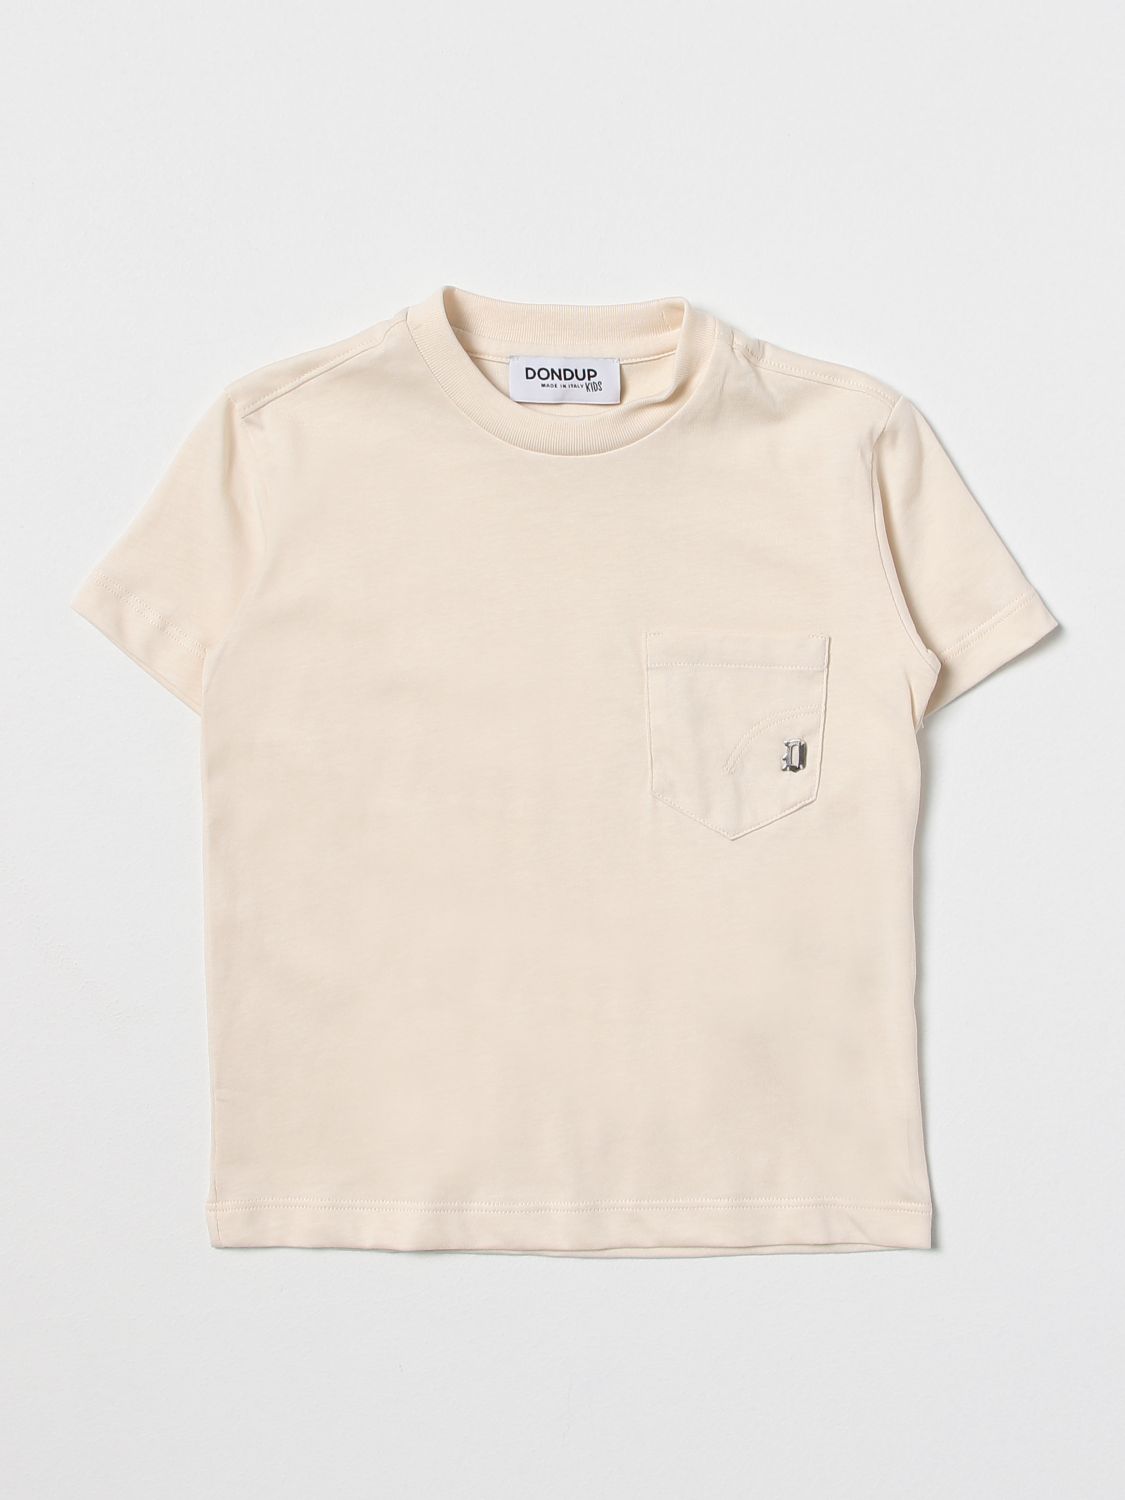 Dondup cotton t-shirt